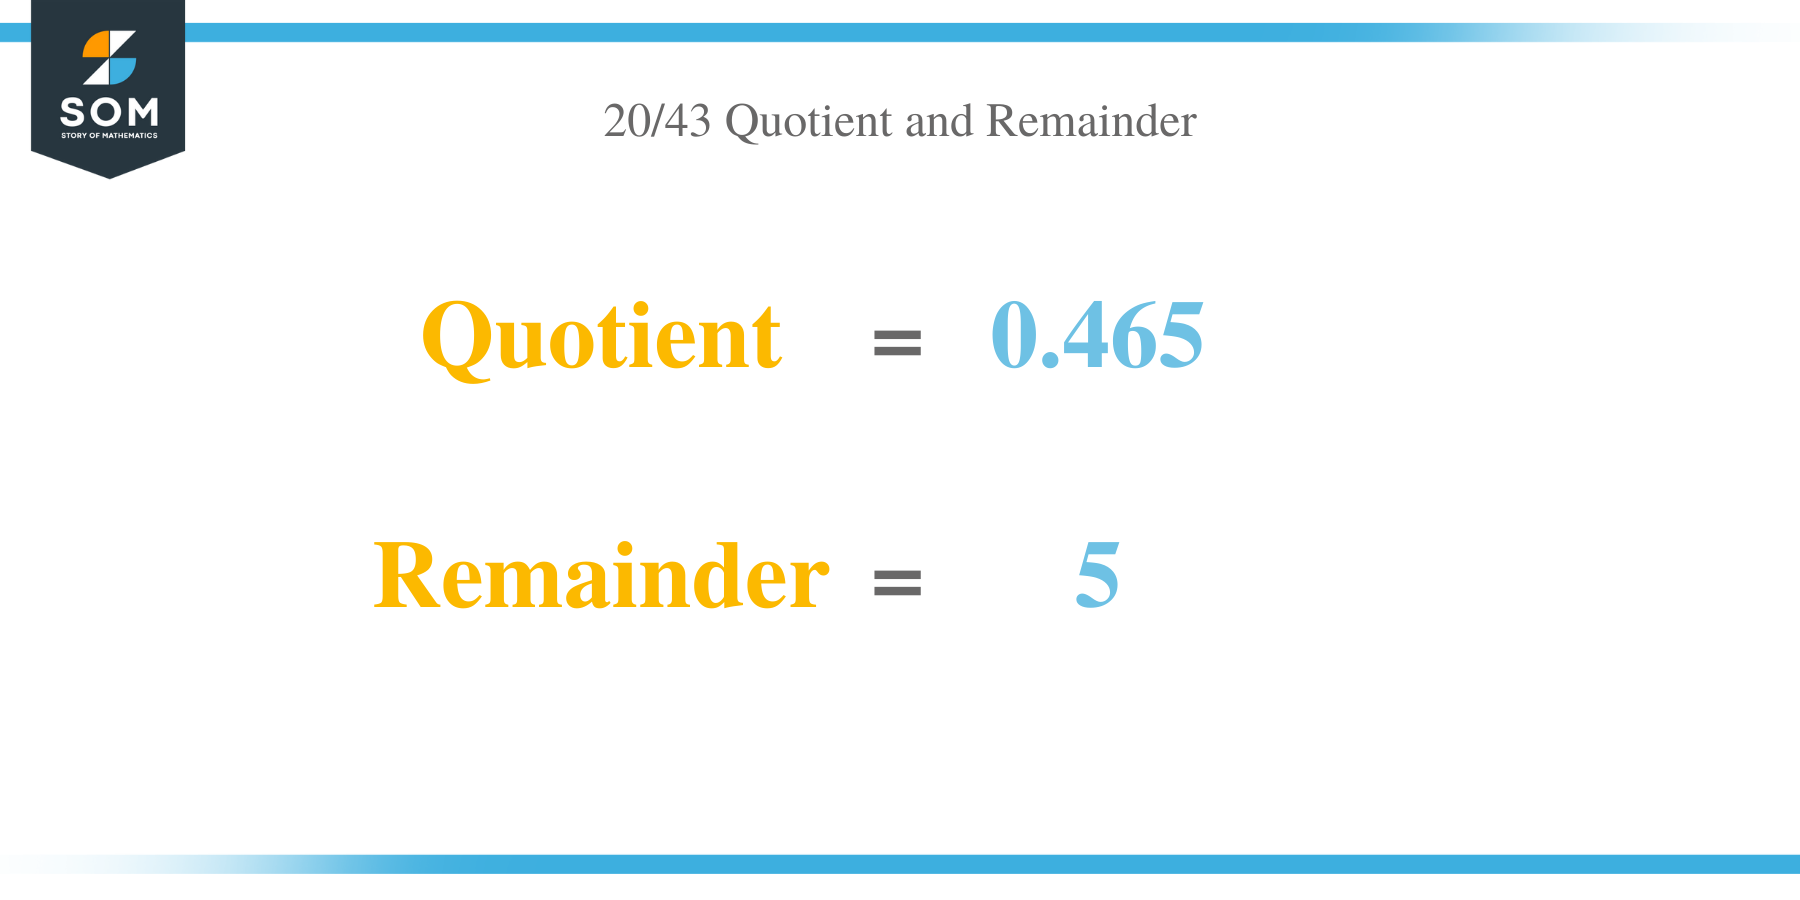 Quotient and Remainder of 20 per 43